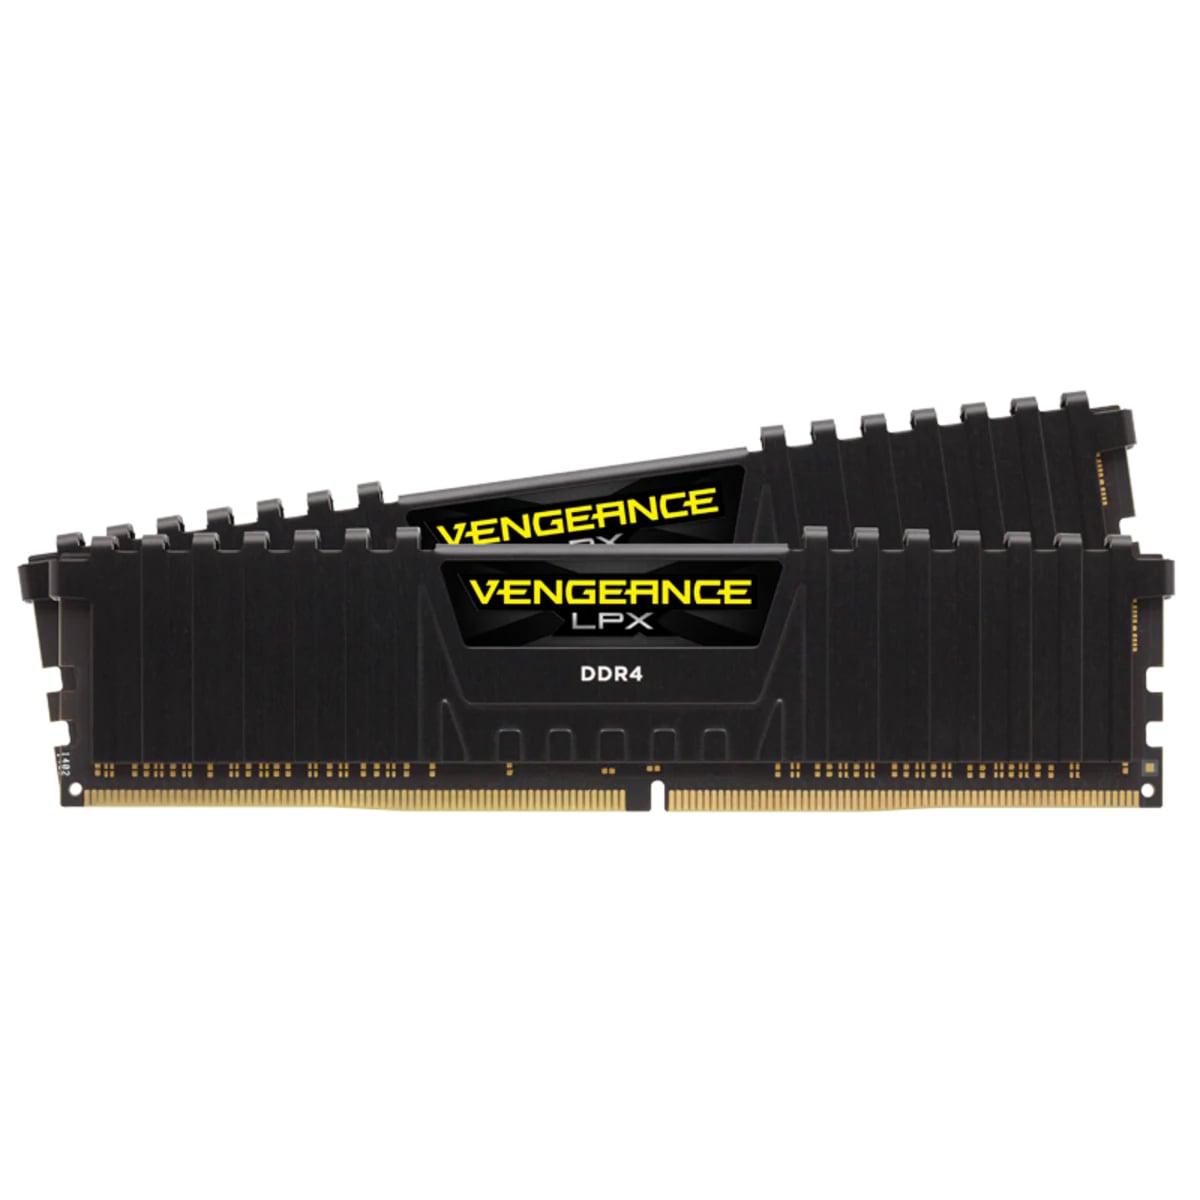 RAM CORSAIR VENGEANCE LPX 32GB (2x16GB) DDR4 2400MHz - CMK32GX4M2A2400C14 - songphuong.vn